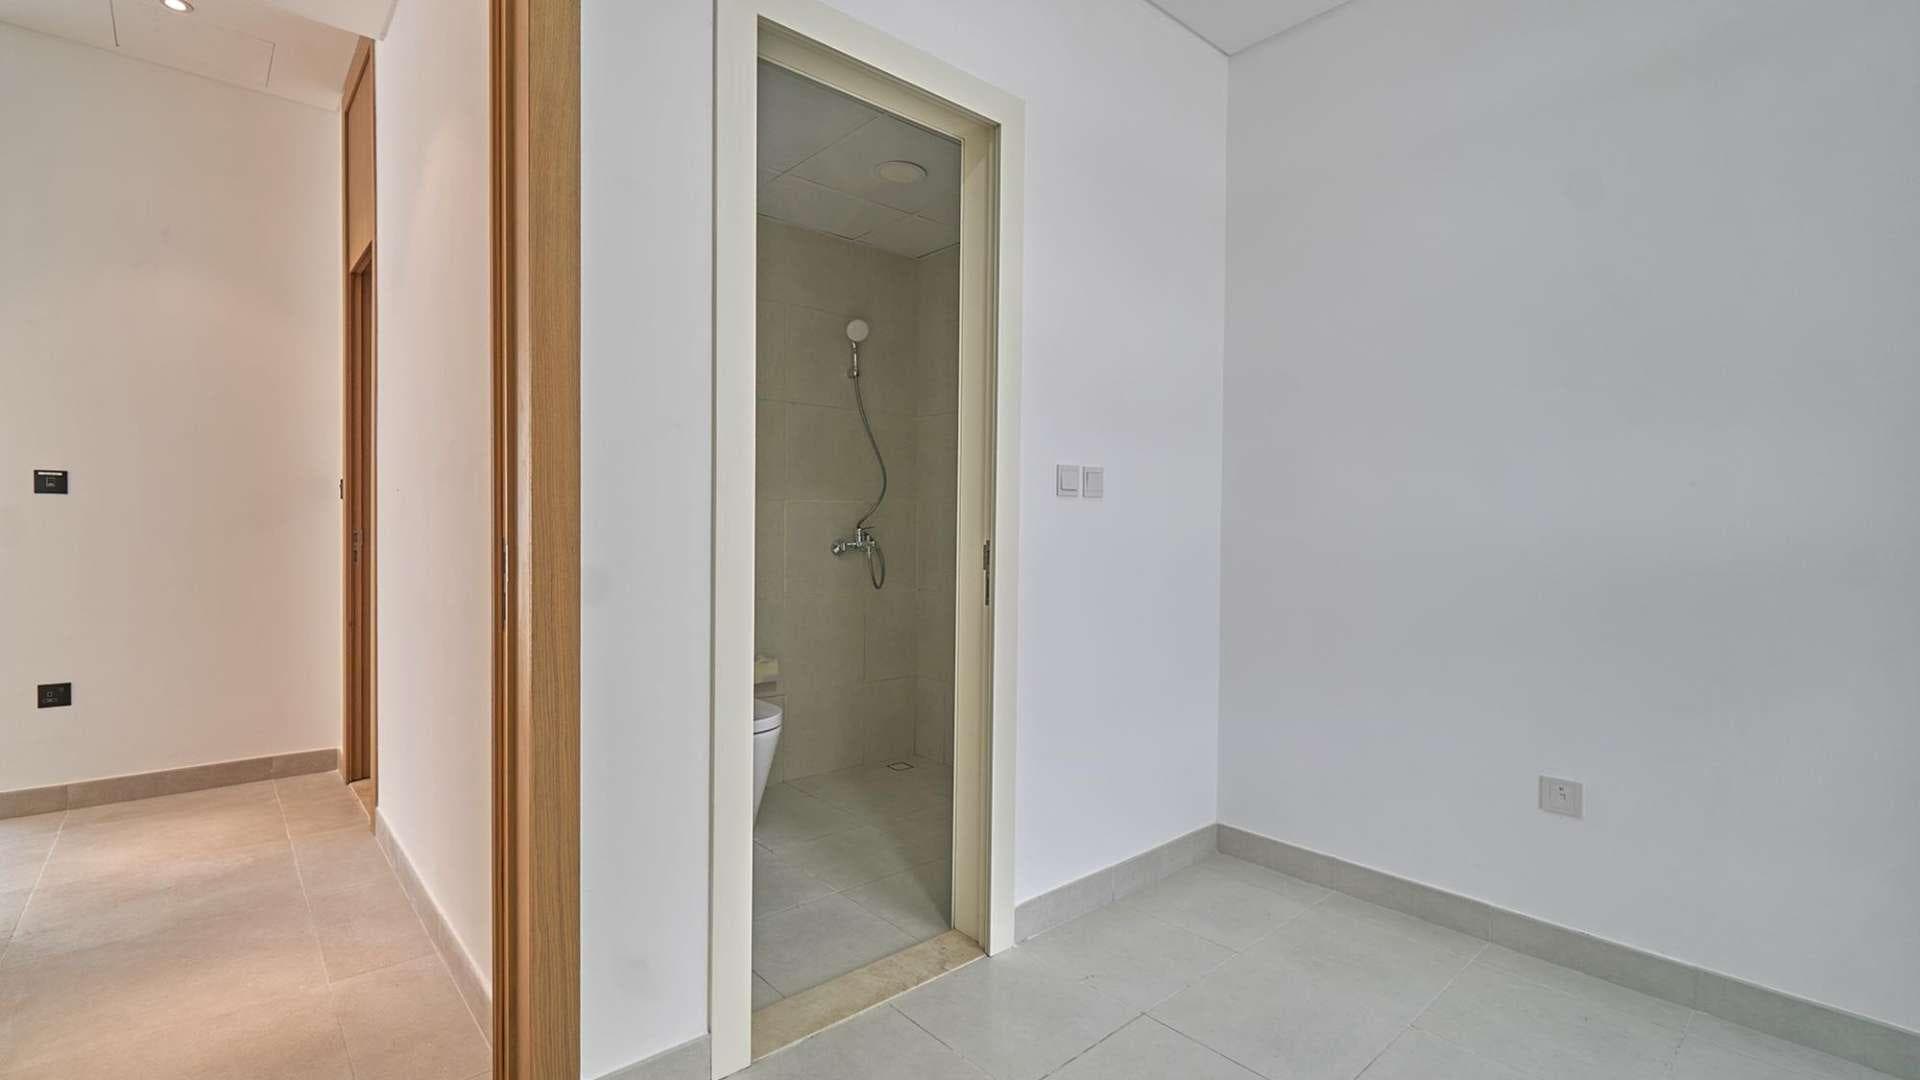 4 Bedroom Villa For Rent Jumeirah Luxury Lp16471 2b1b4edf32b18400.jpg